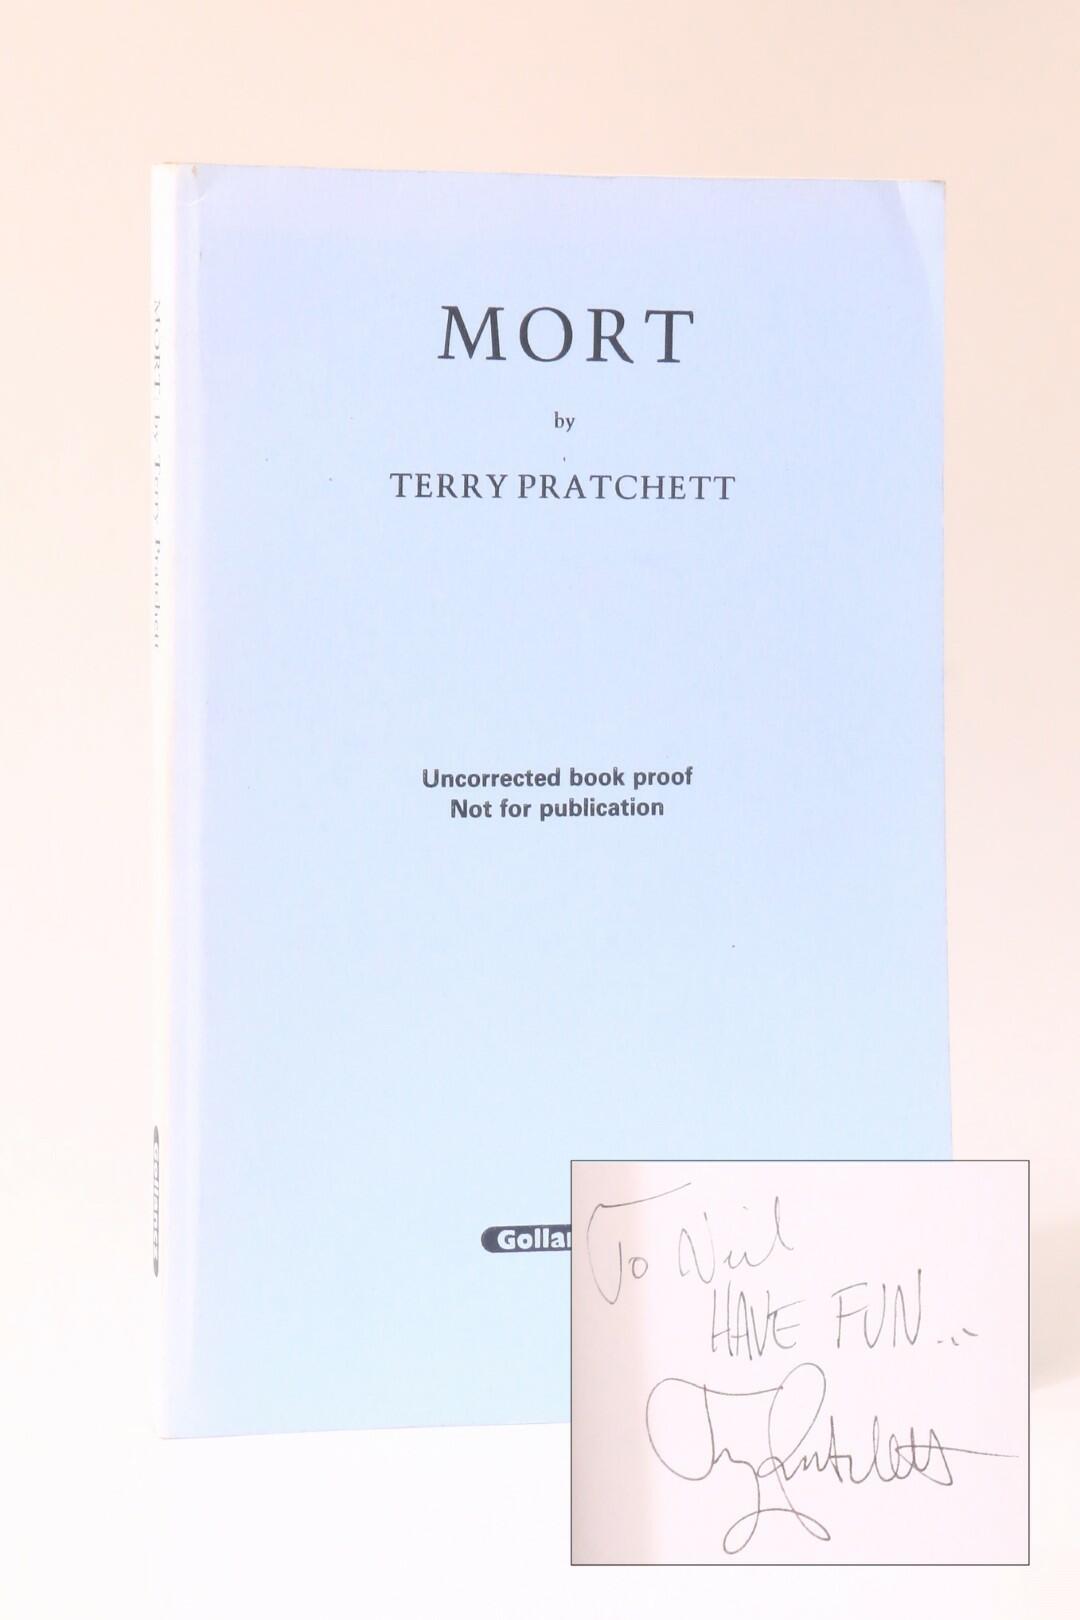 Terry Pratchett - Mort - Gollancz, 1987, Proof. Signed